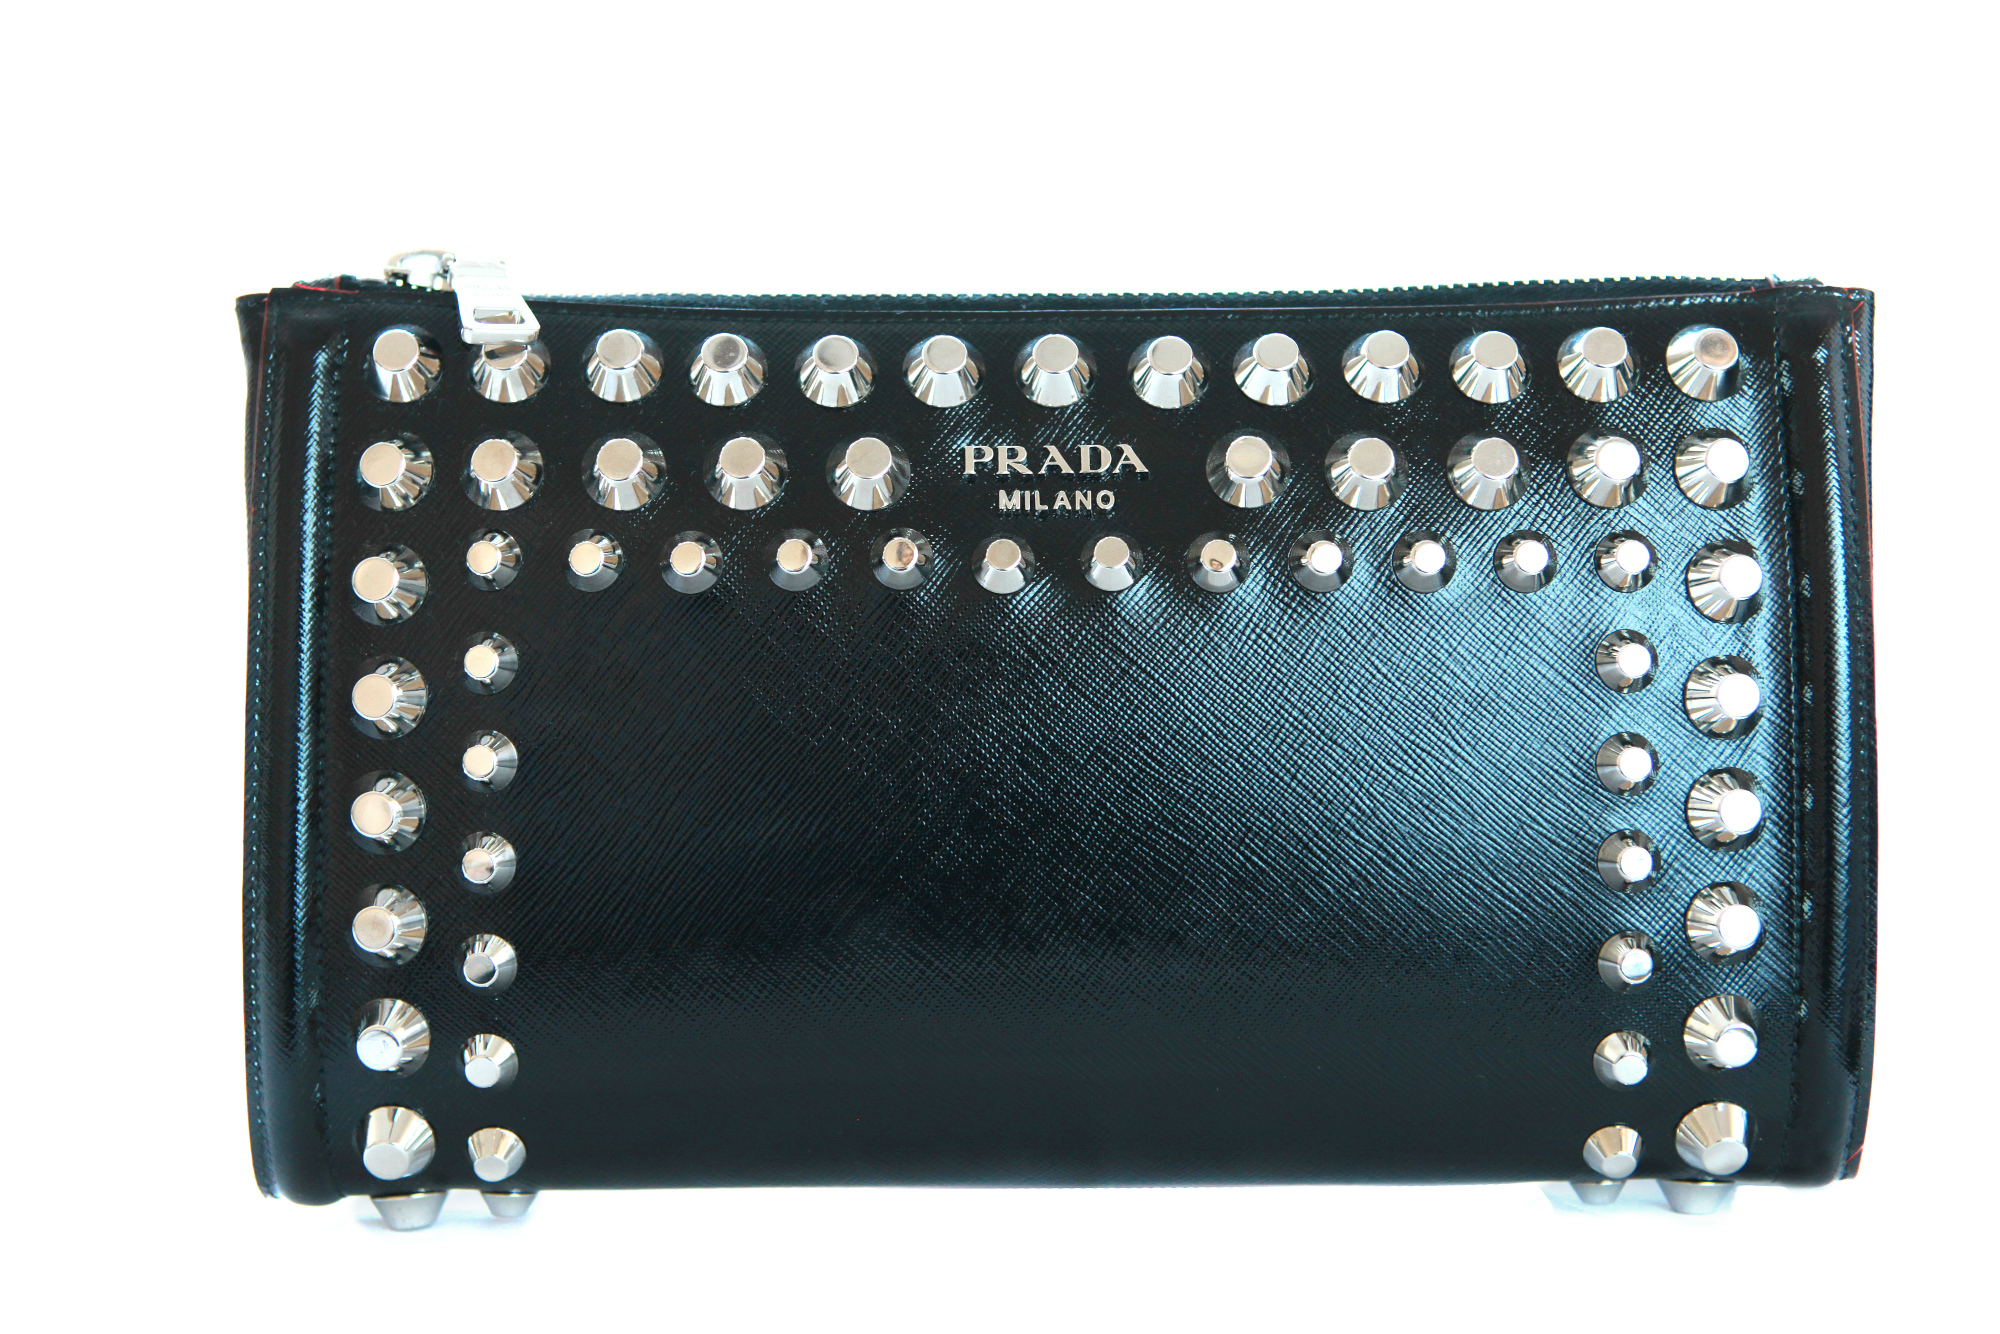 prada bag price - prada leather clutch bag